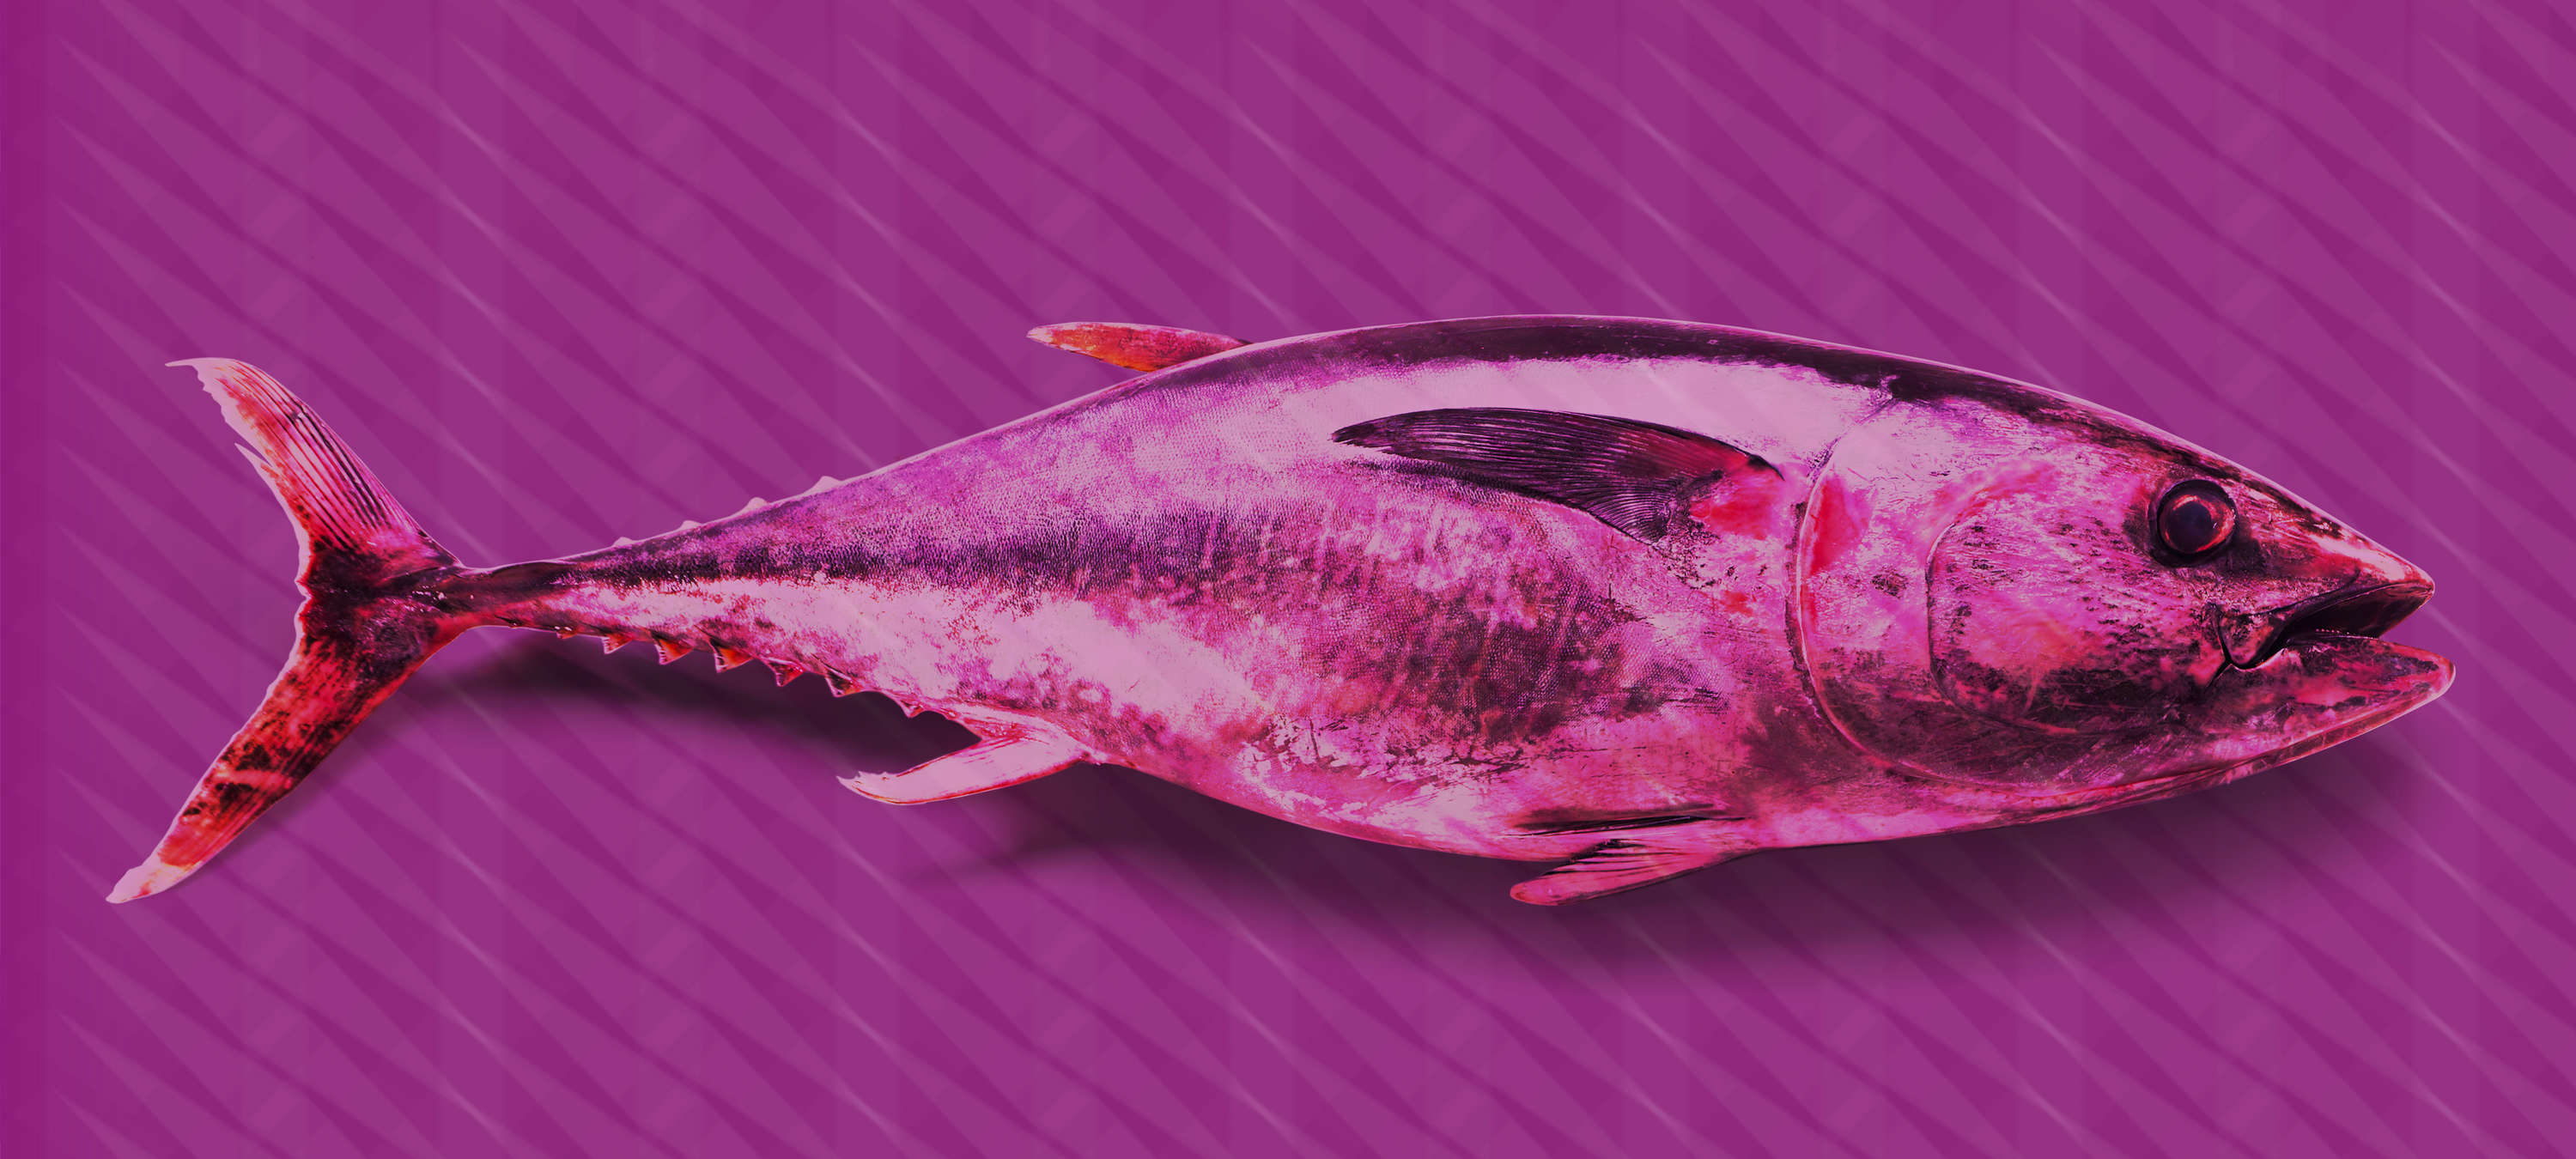             Thunfisch-Fototapete im Pop Art Stil – Violett, Rosa, Rot – Strukturiertes Vlies
        